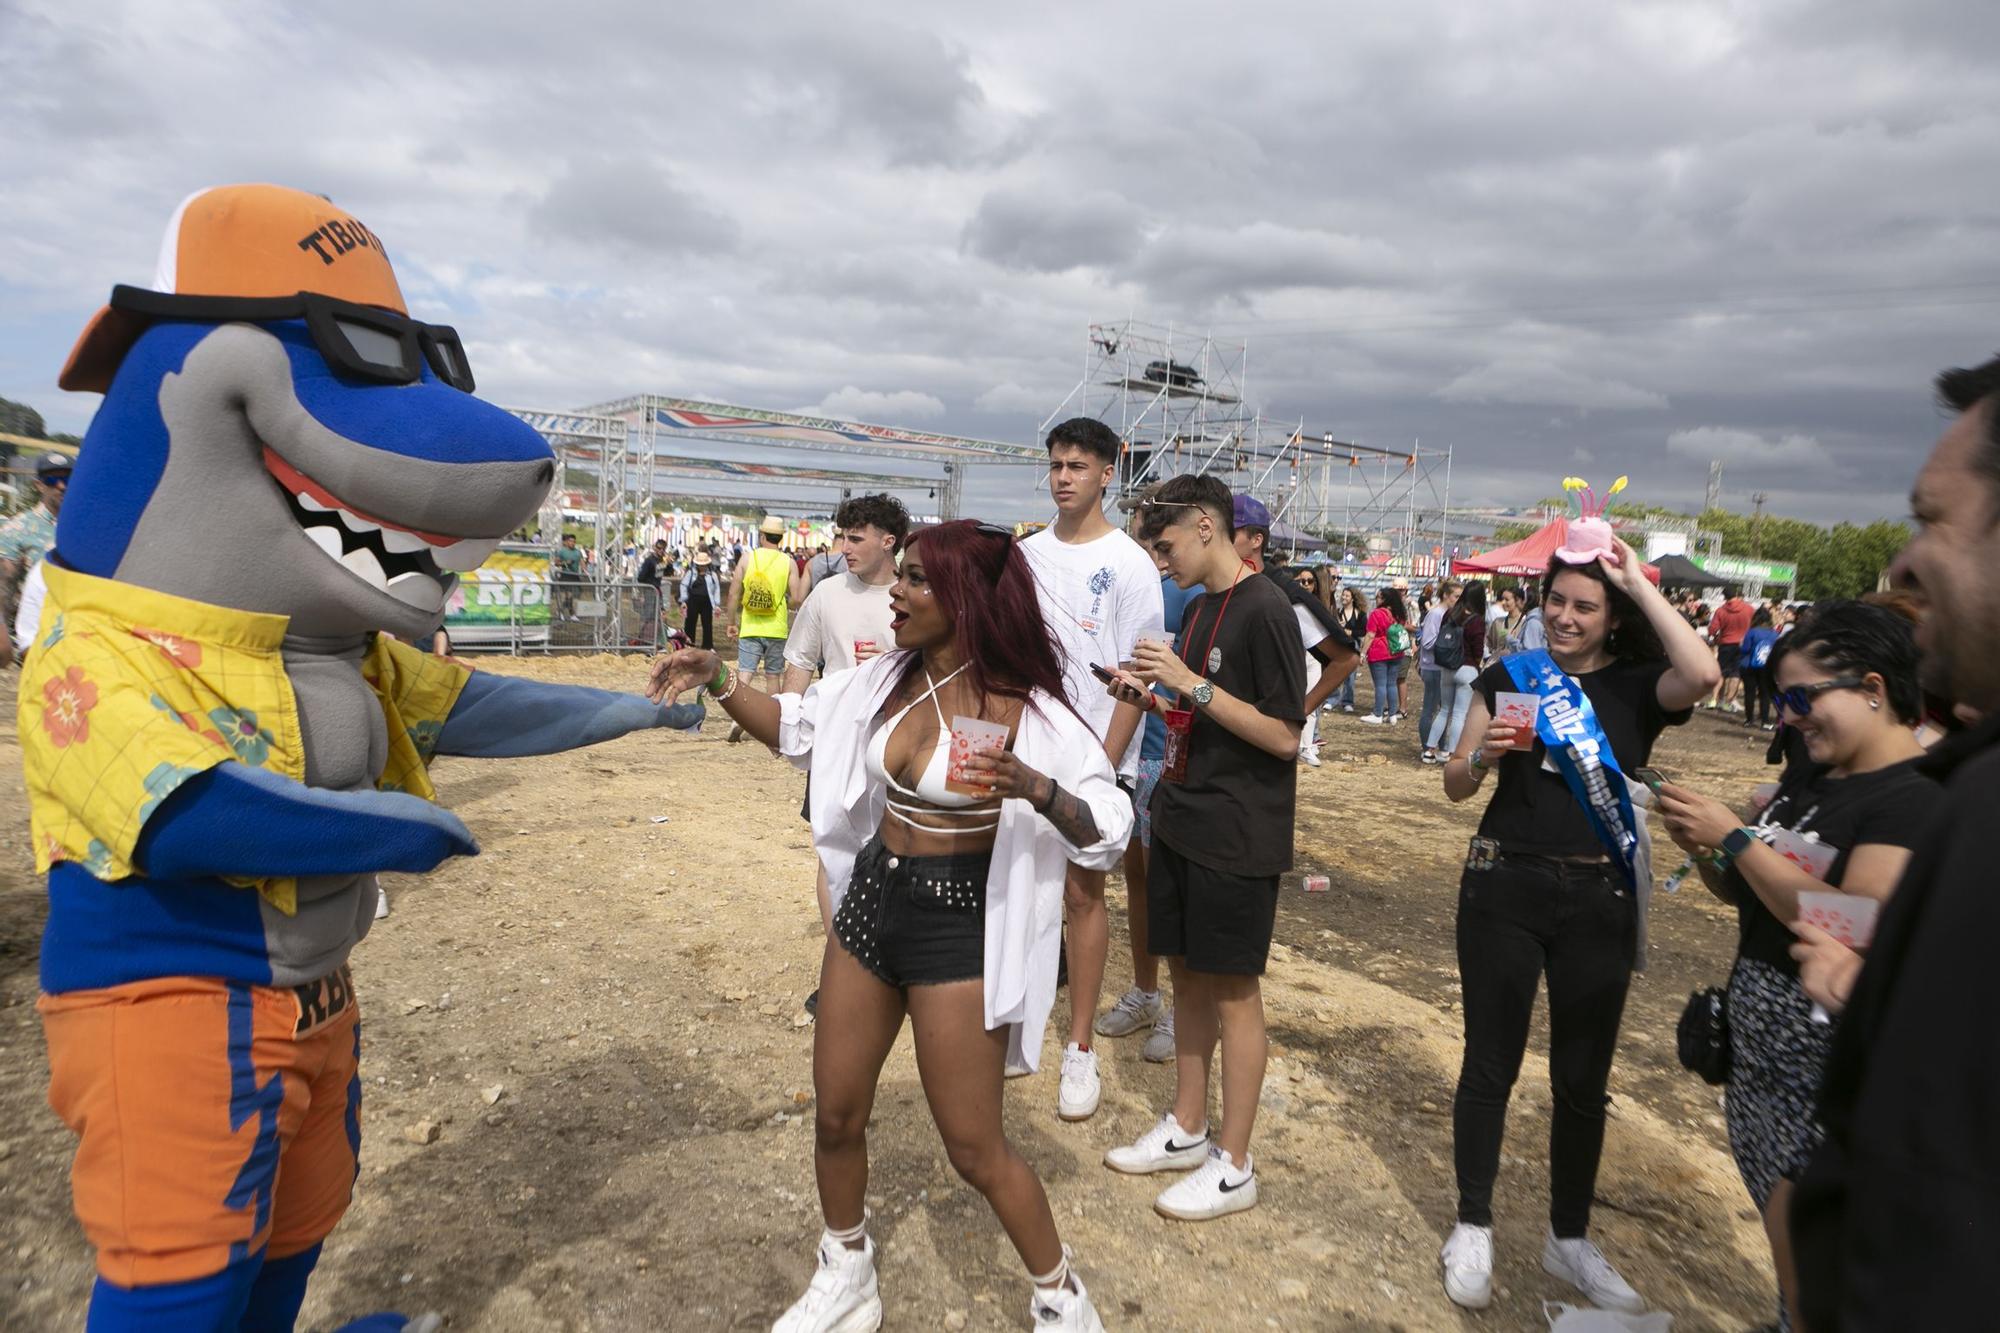 El Reggaeton Beach Festival de Avilés, en imágenes